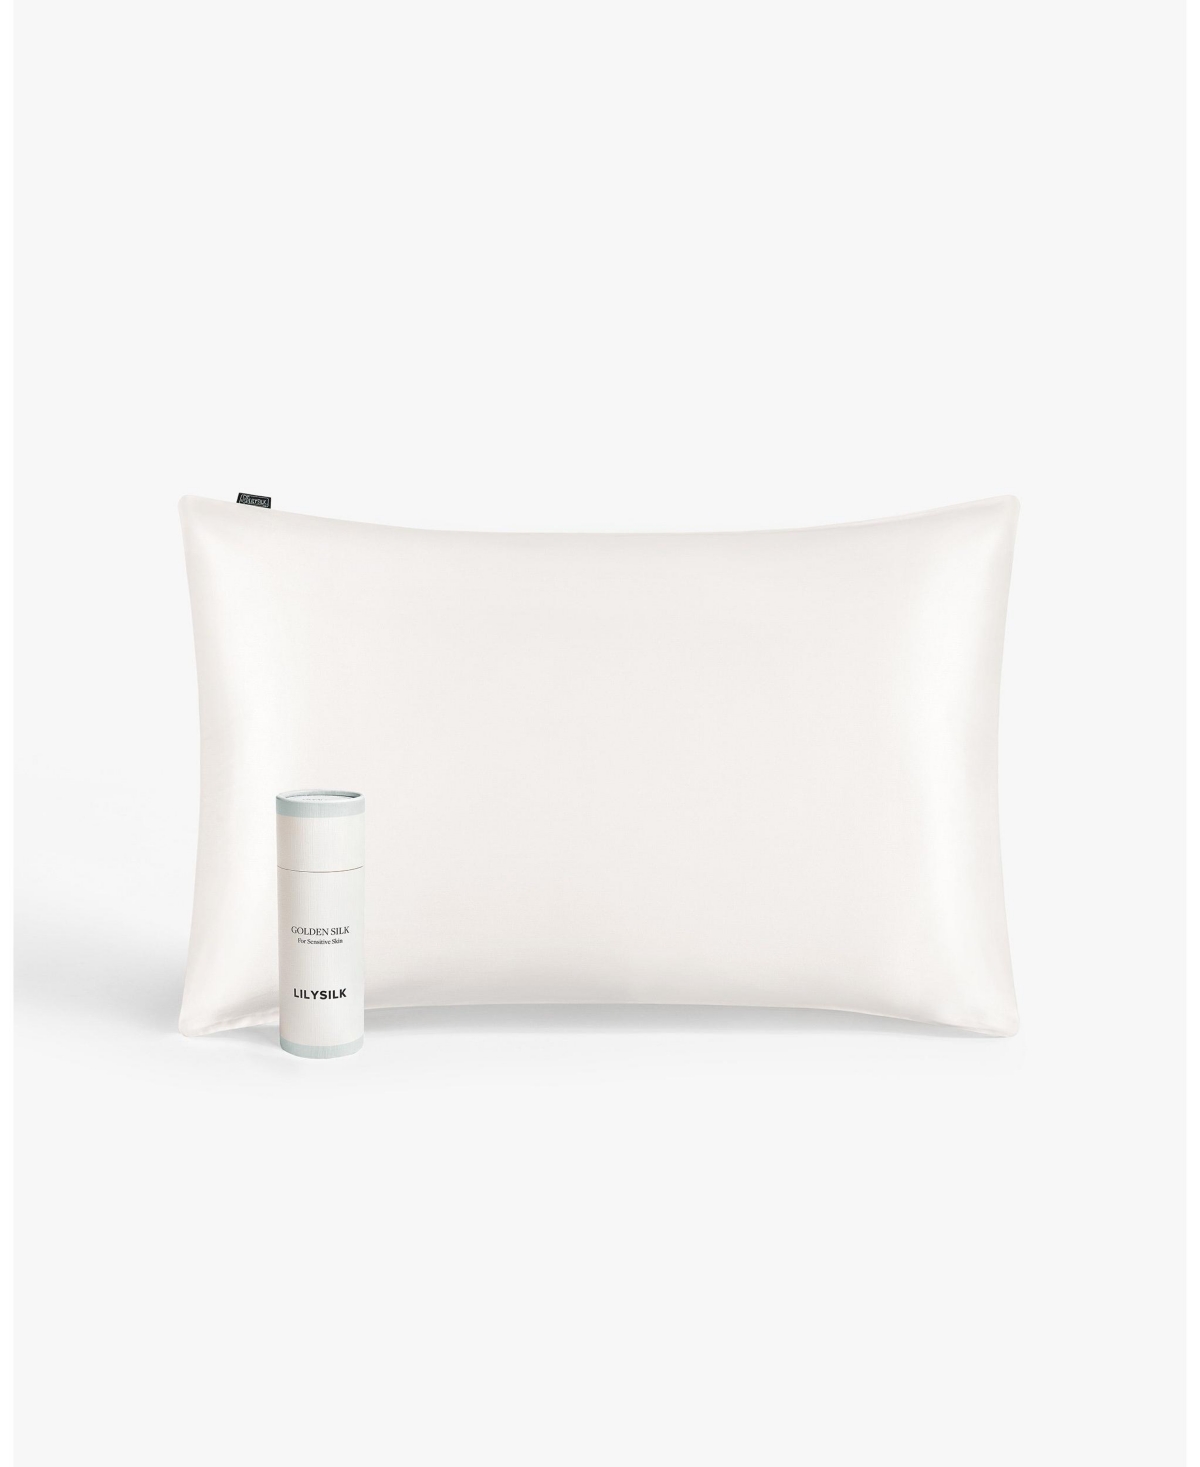 Lilysilk White 100% Pure Mulberry Silk Pillowcase, Standard